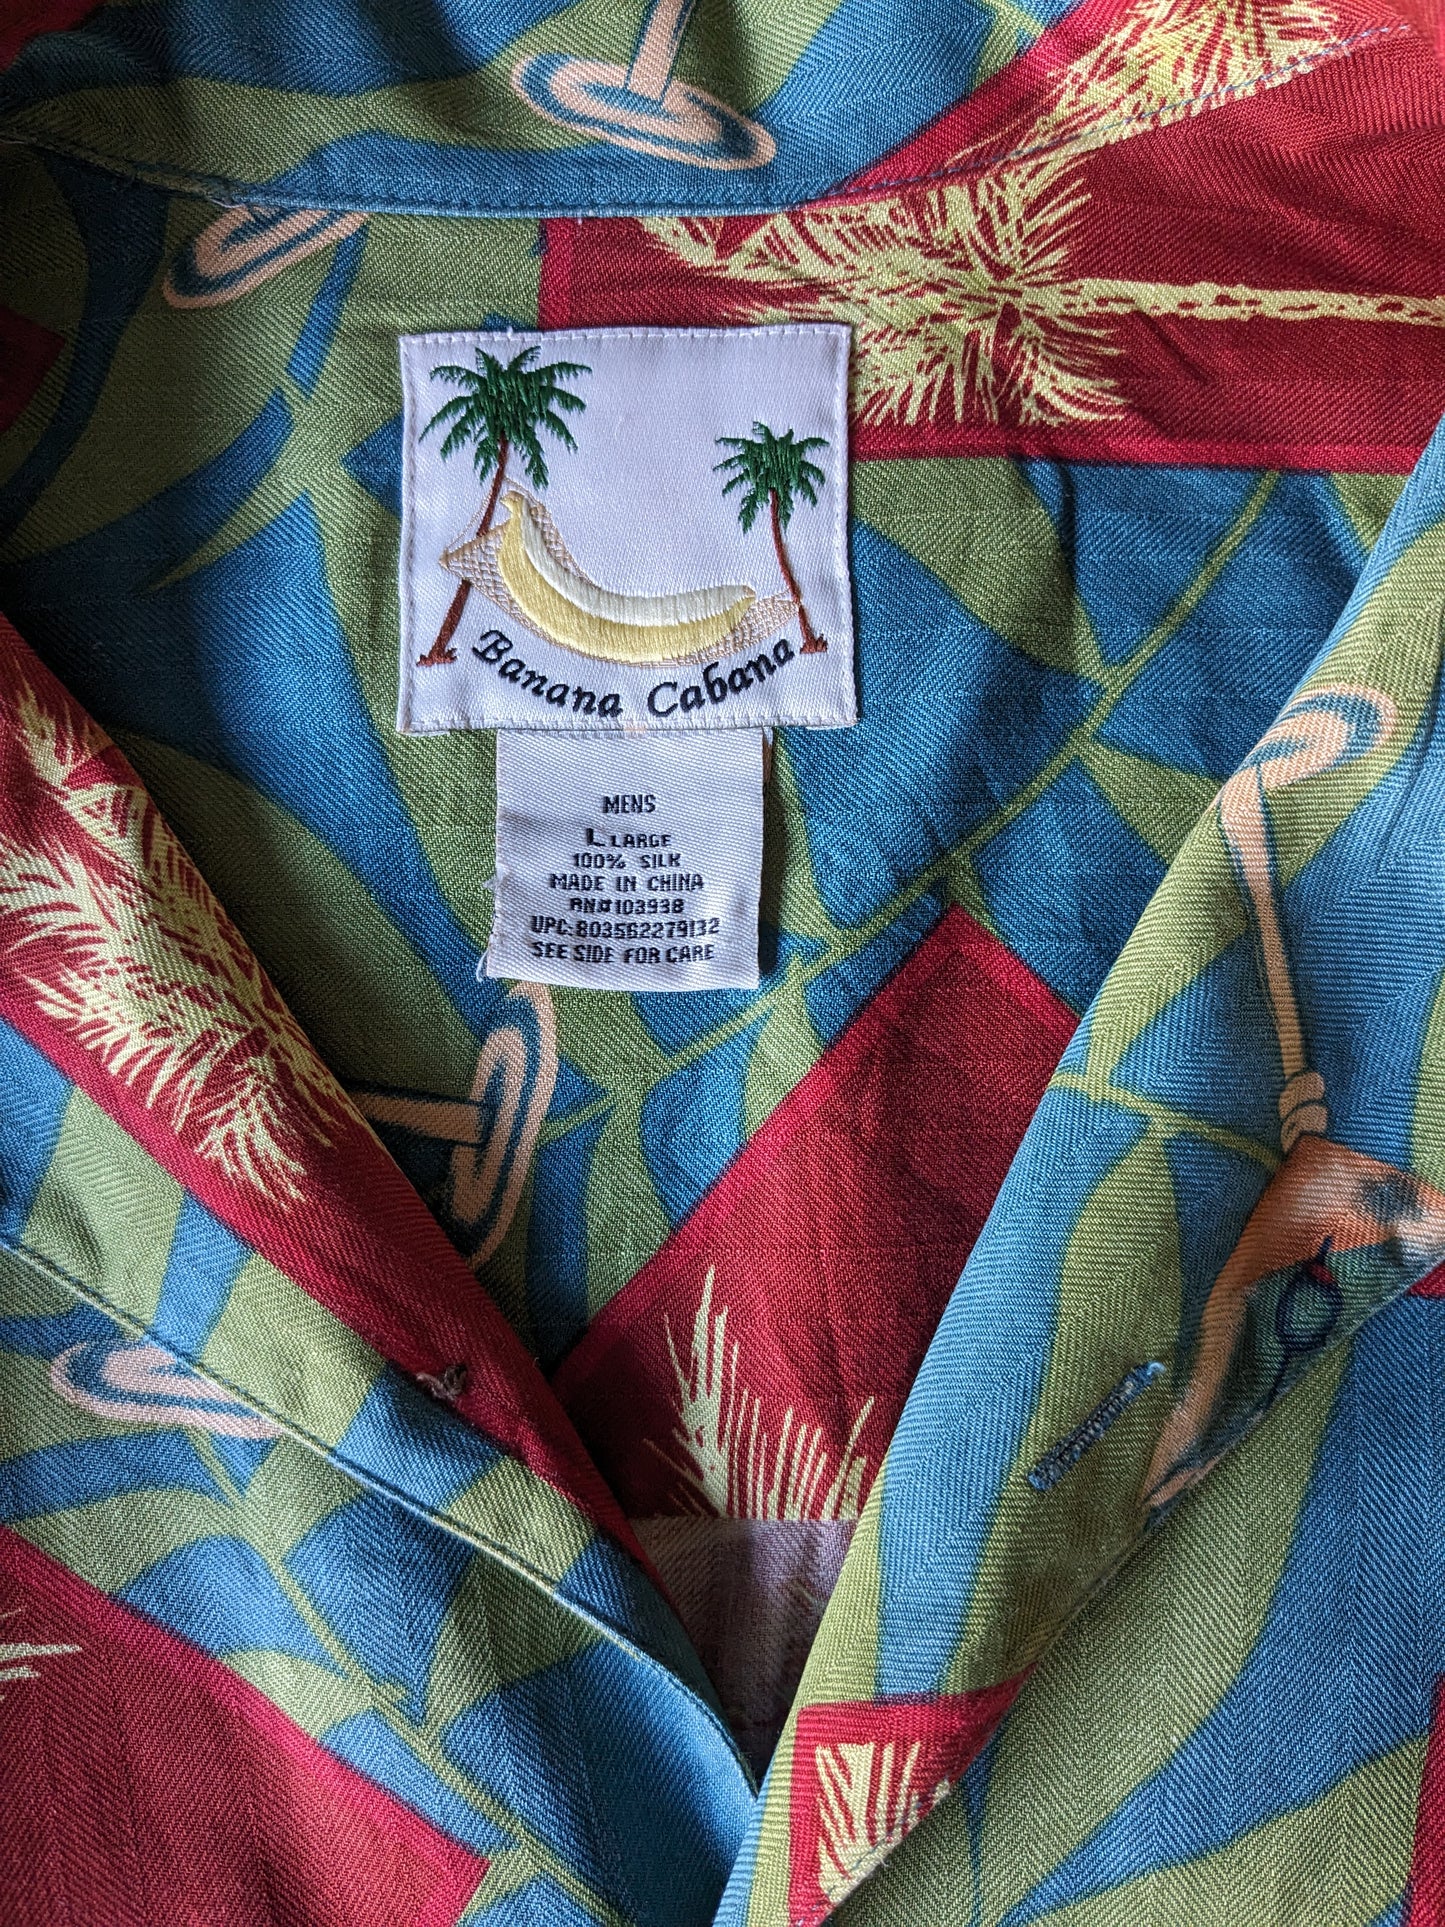 Banana Cabana original Hawaii overhemd korte mouw. Rood Groen Blauw print. Maat L / XL.